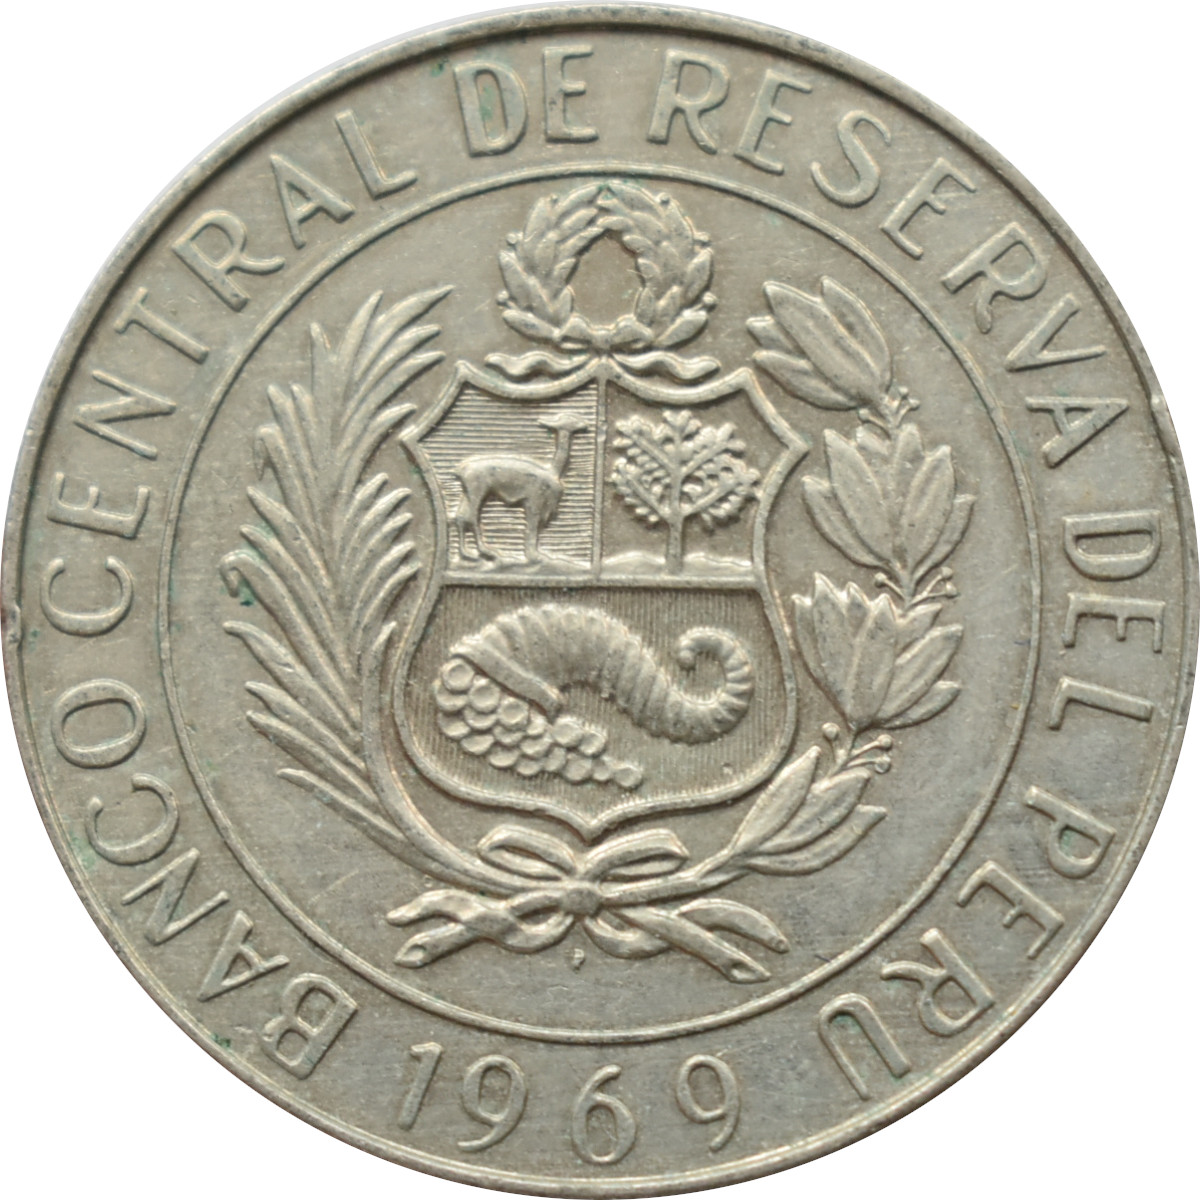 Peru 10 Soles de Oro 1969